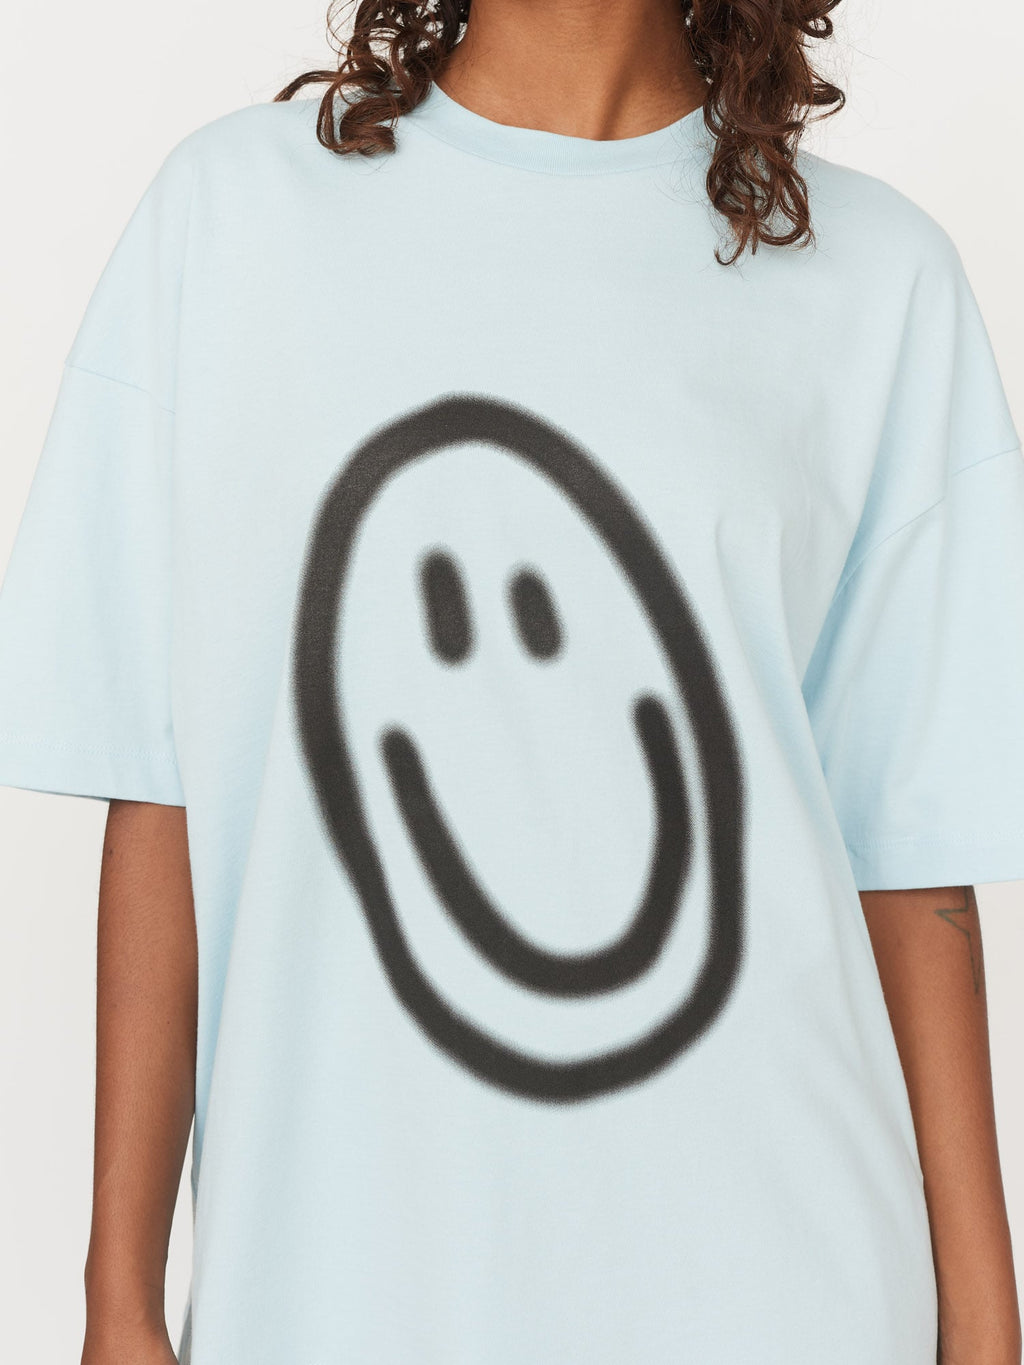 Wearing A Smile T-Shirt